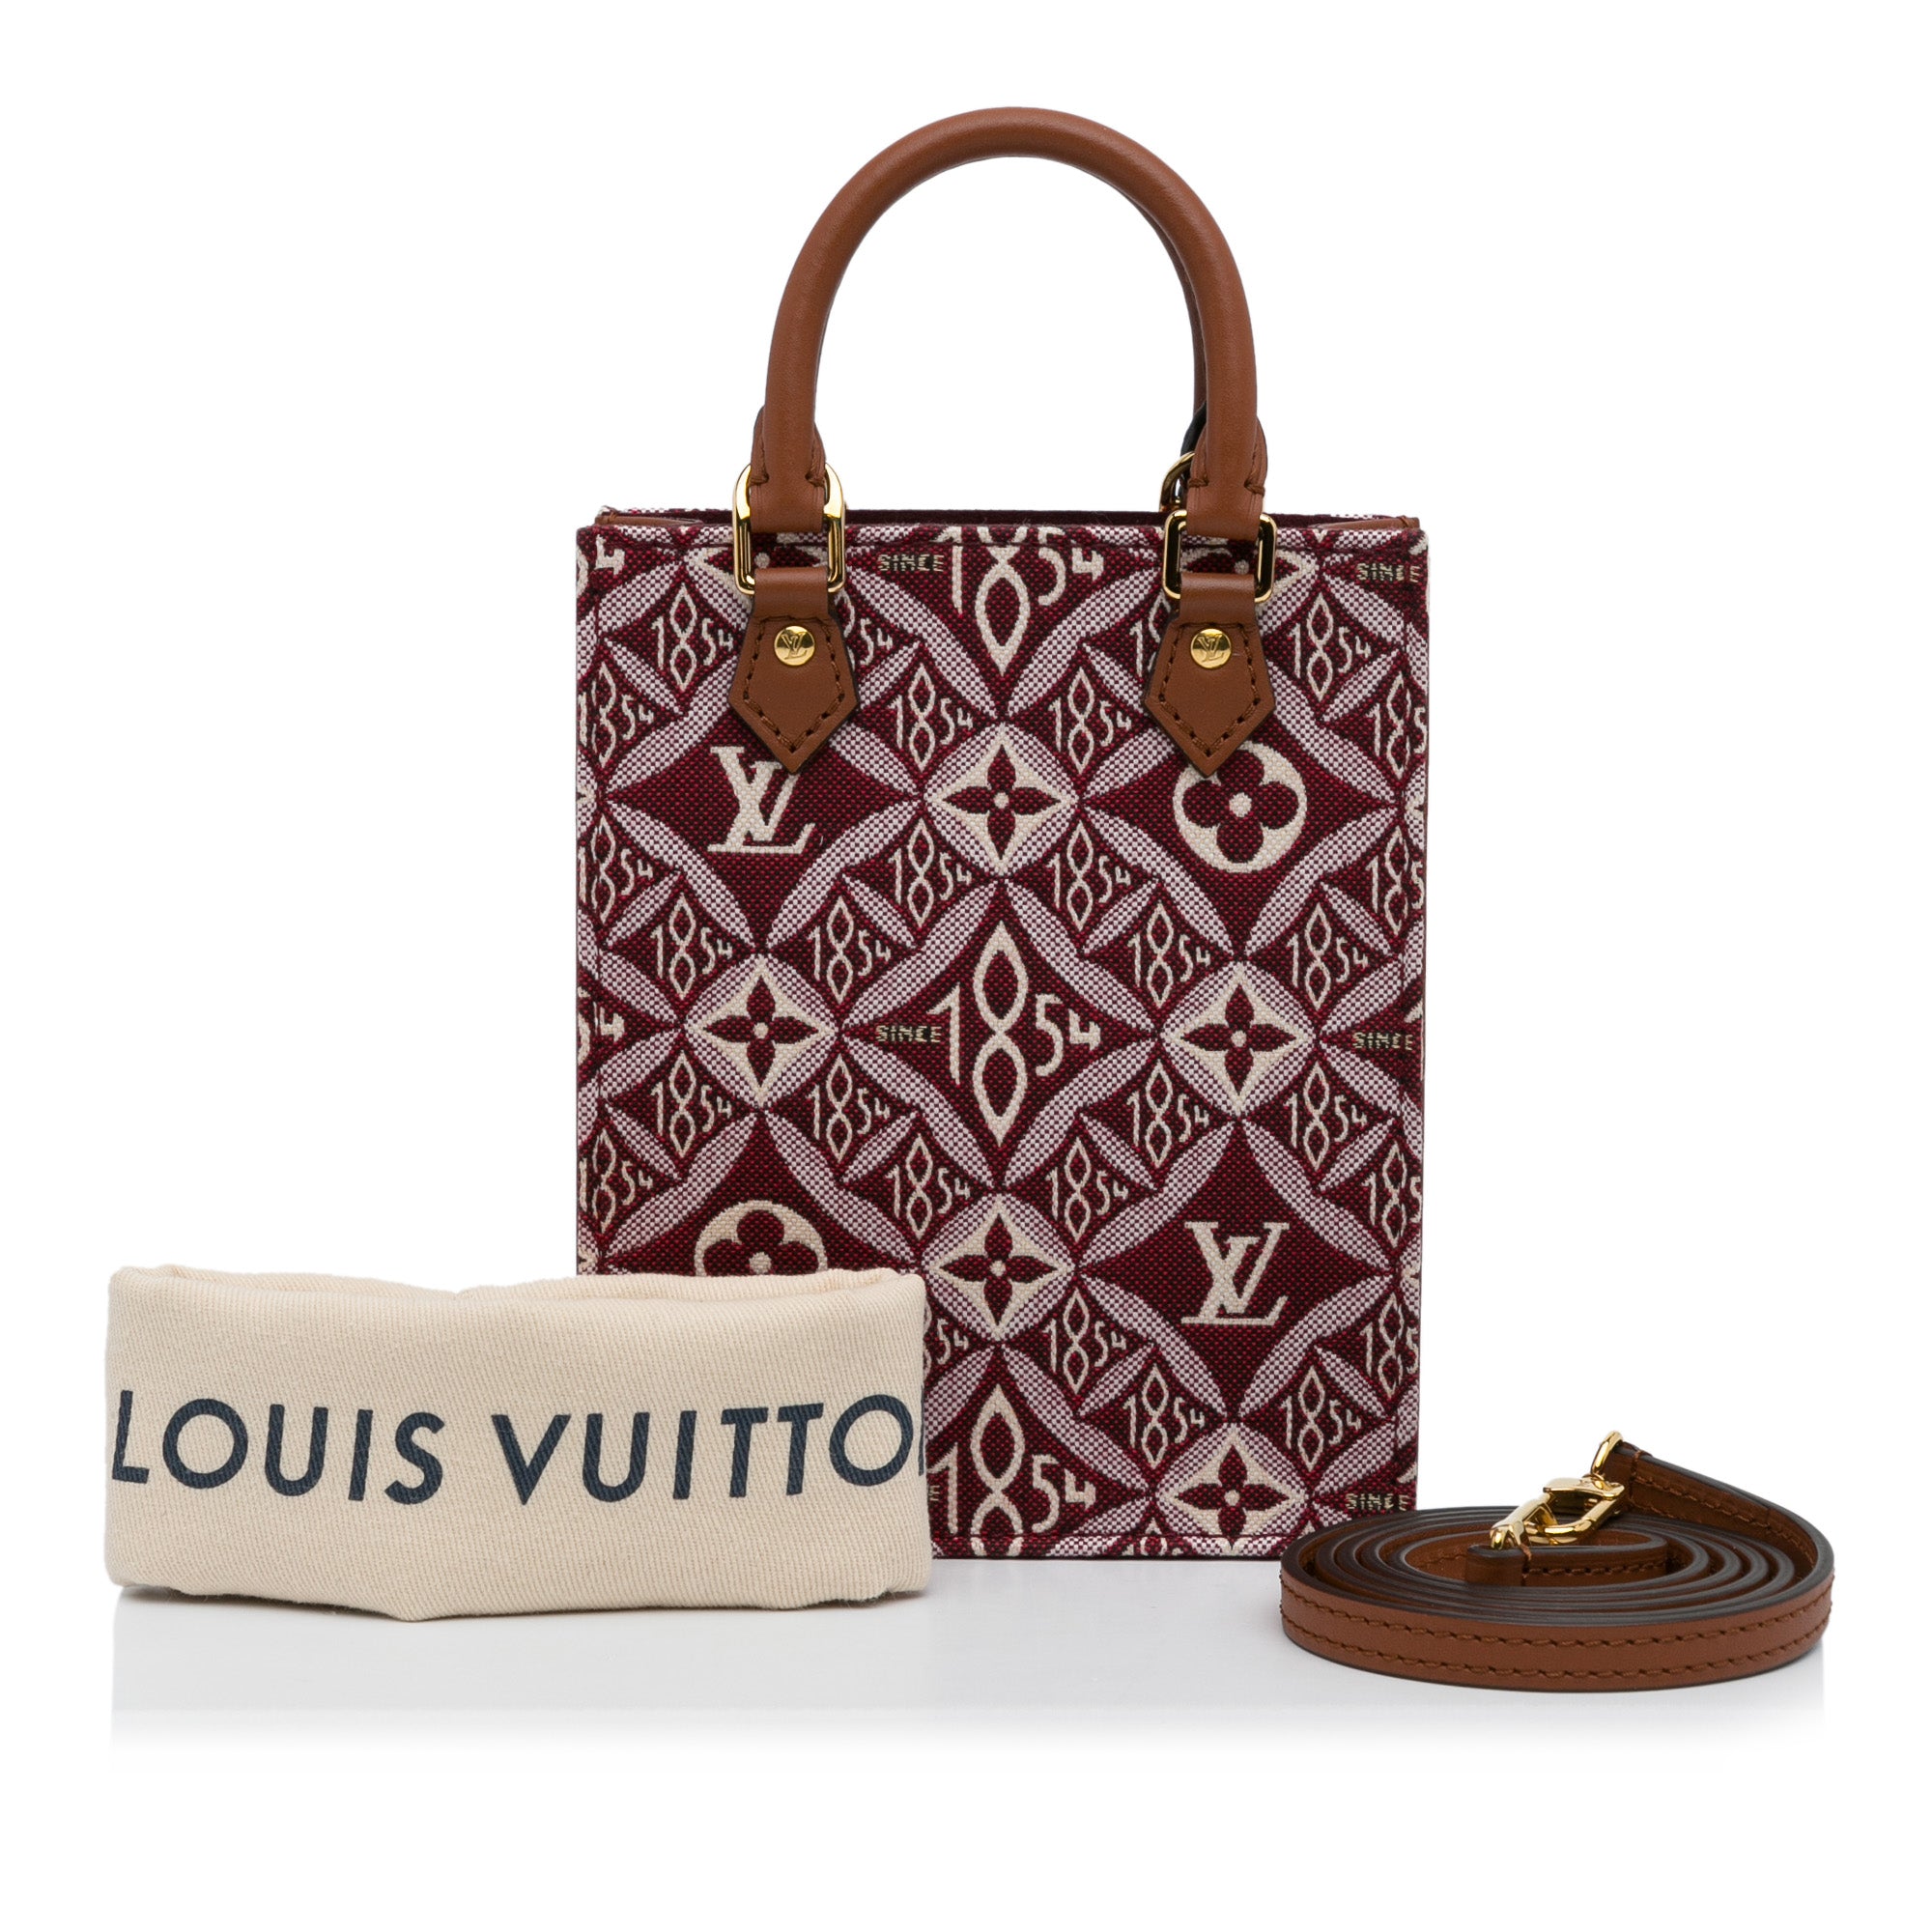 Louis Vuitton Since 1854 & Winter Collection